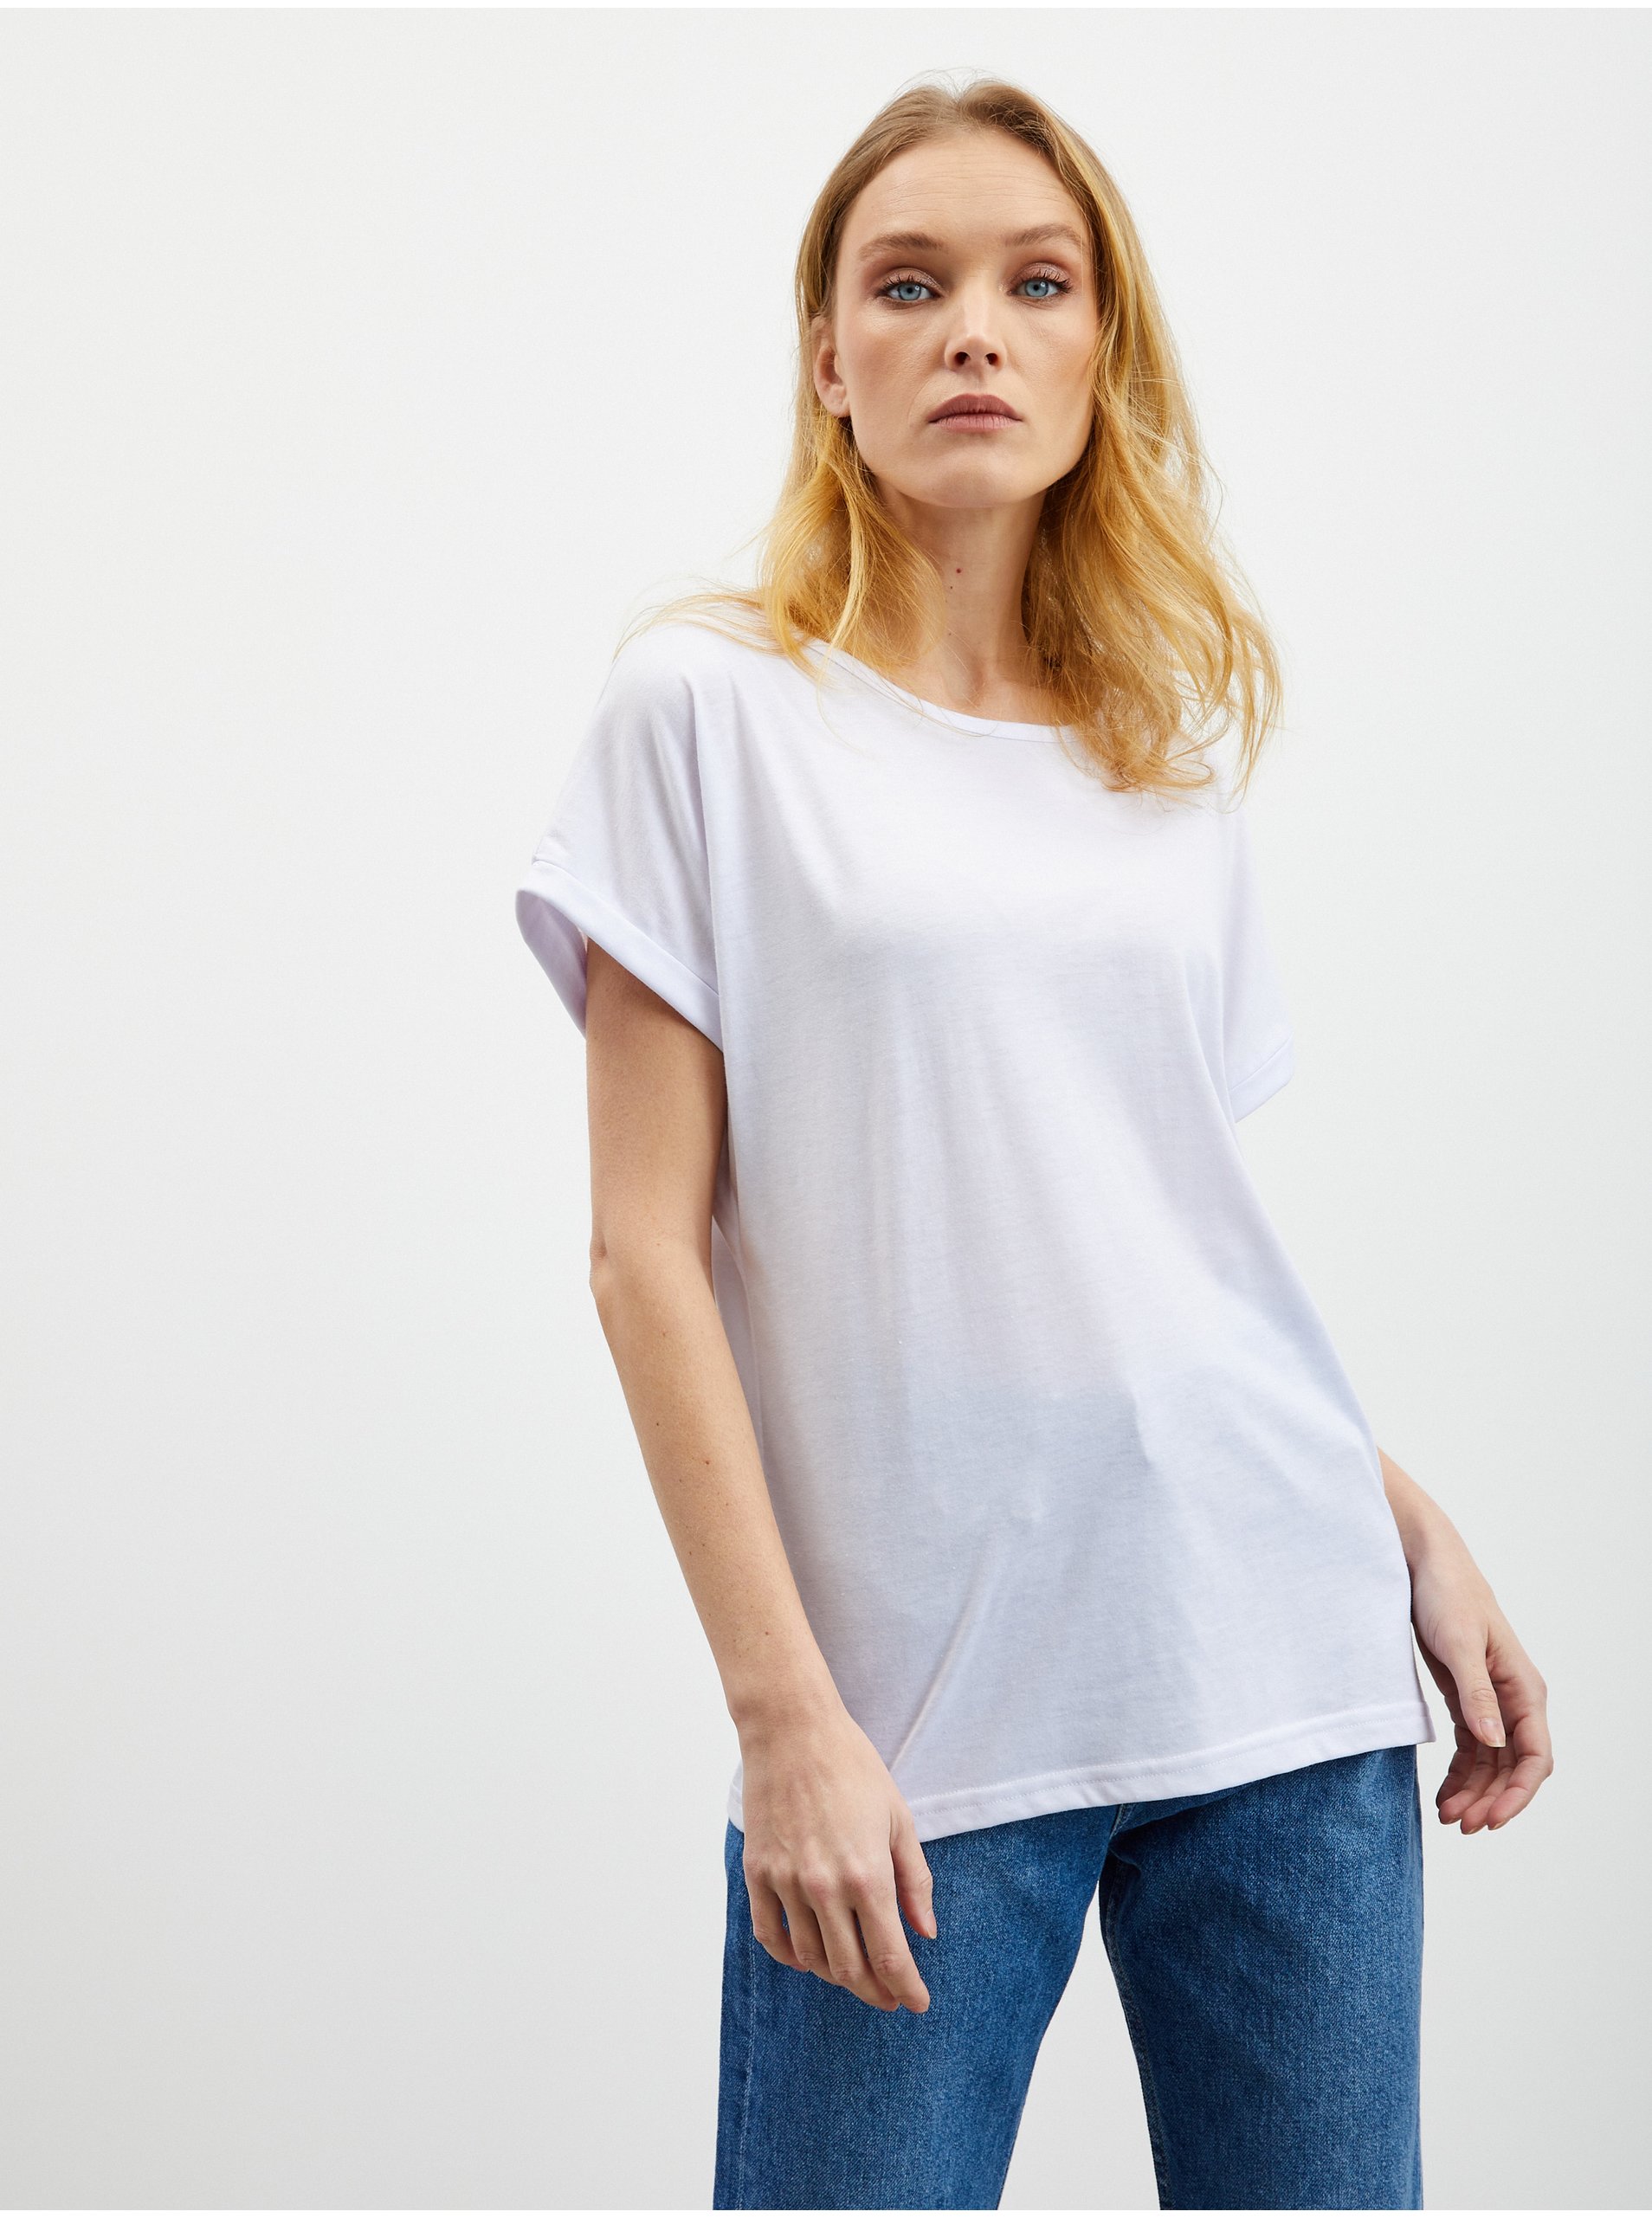 E-shop Bílé dámské tričko ZOOT.lab Olla